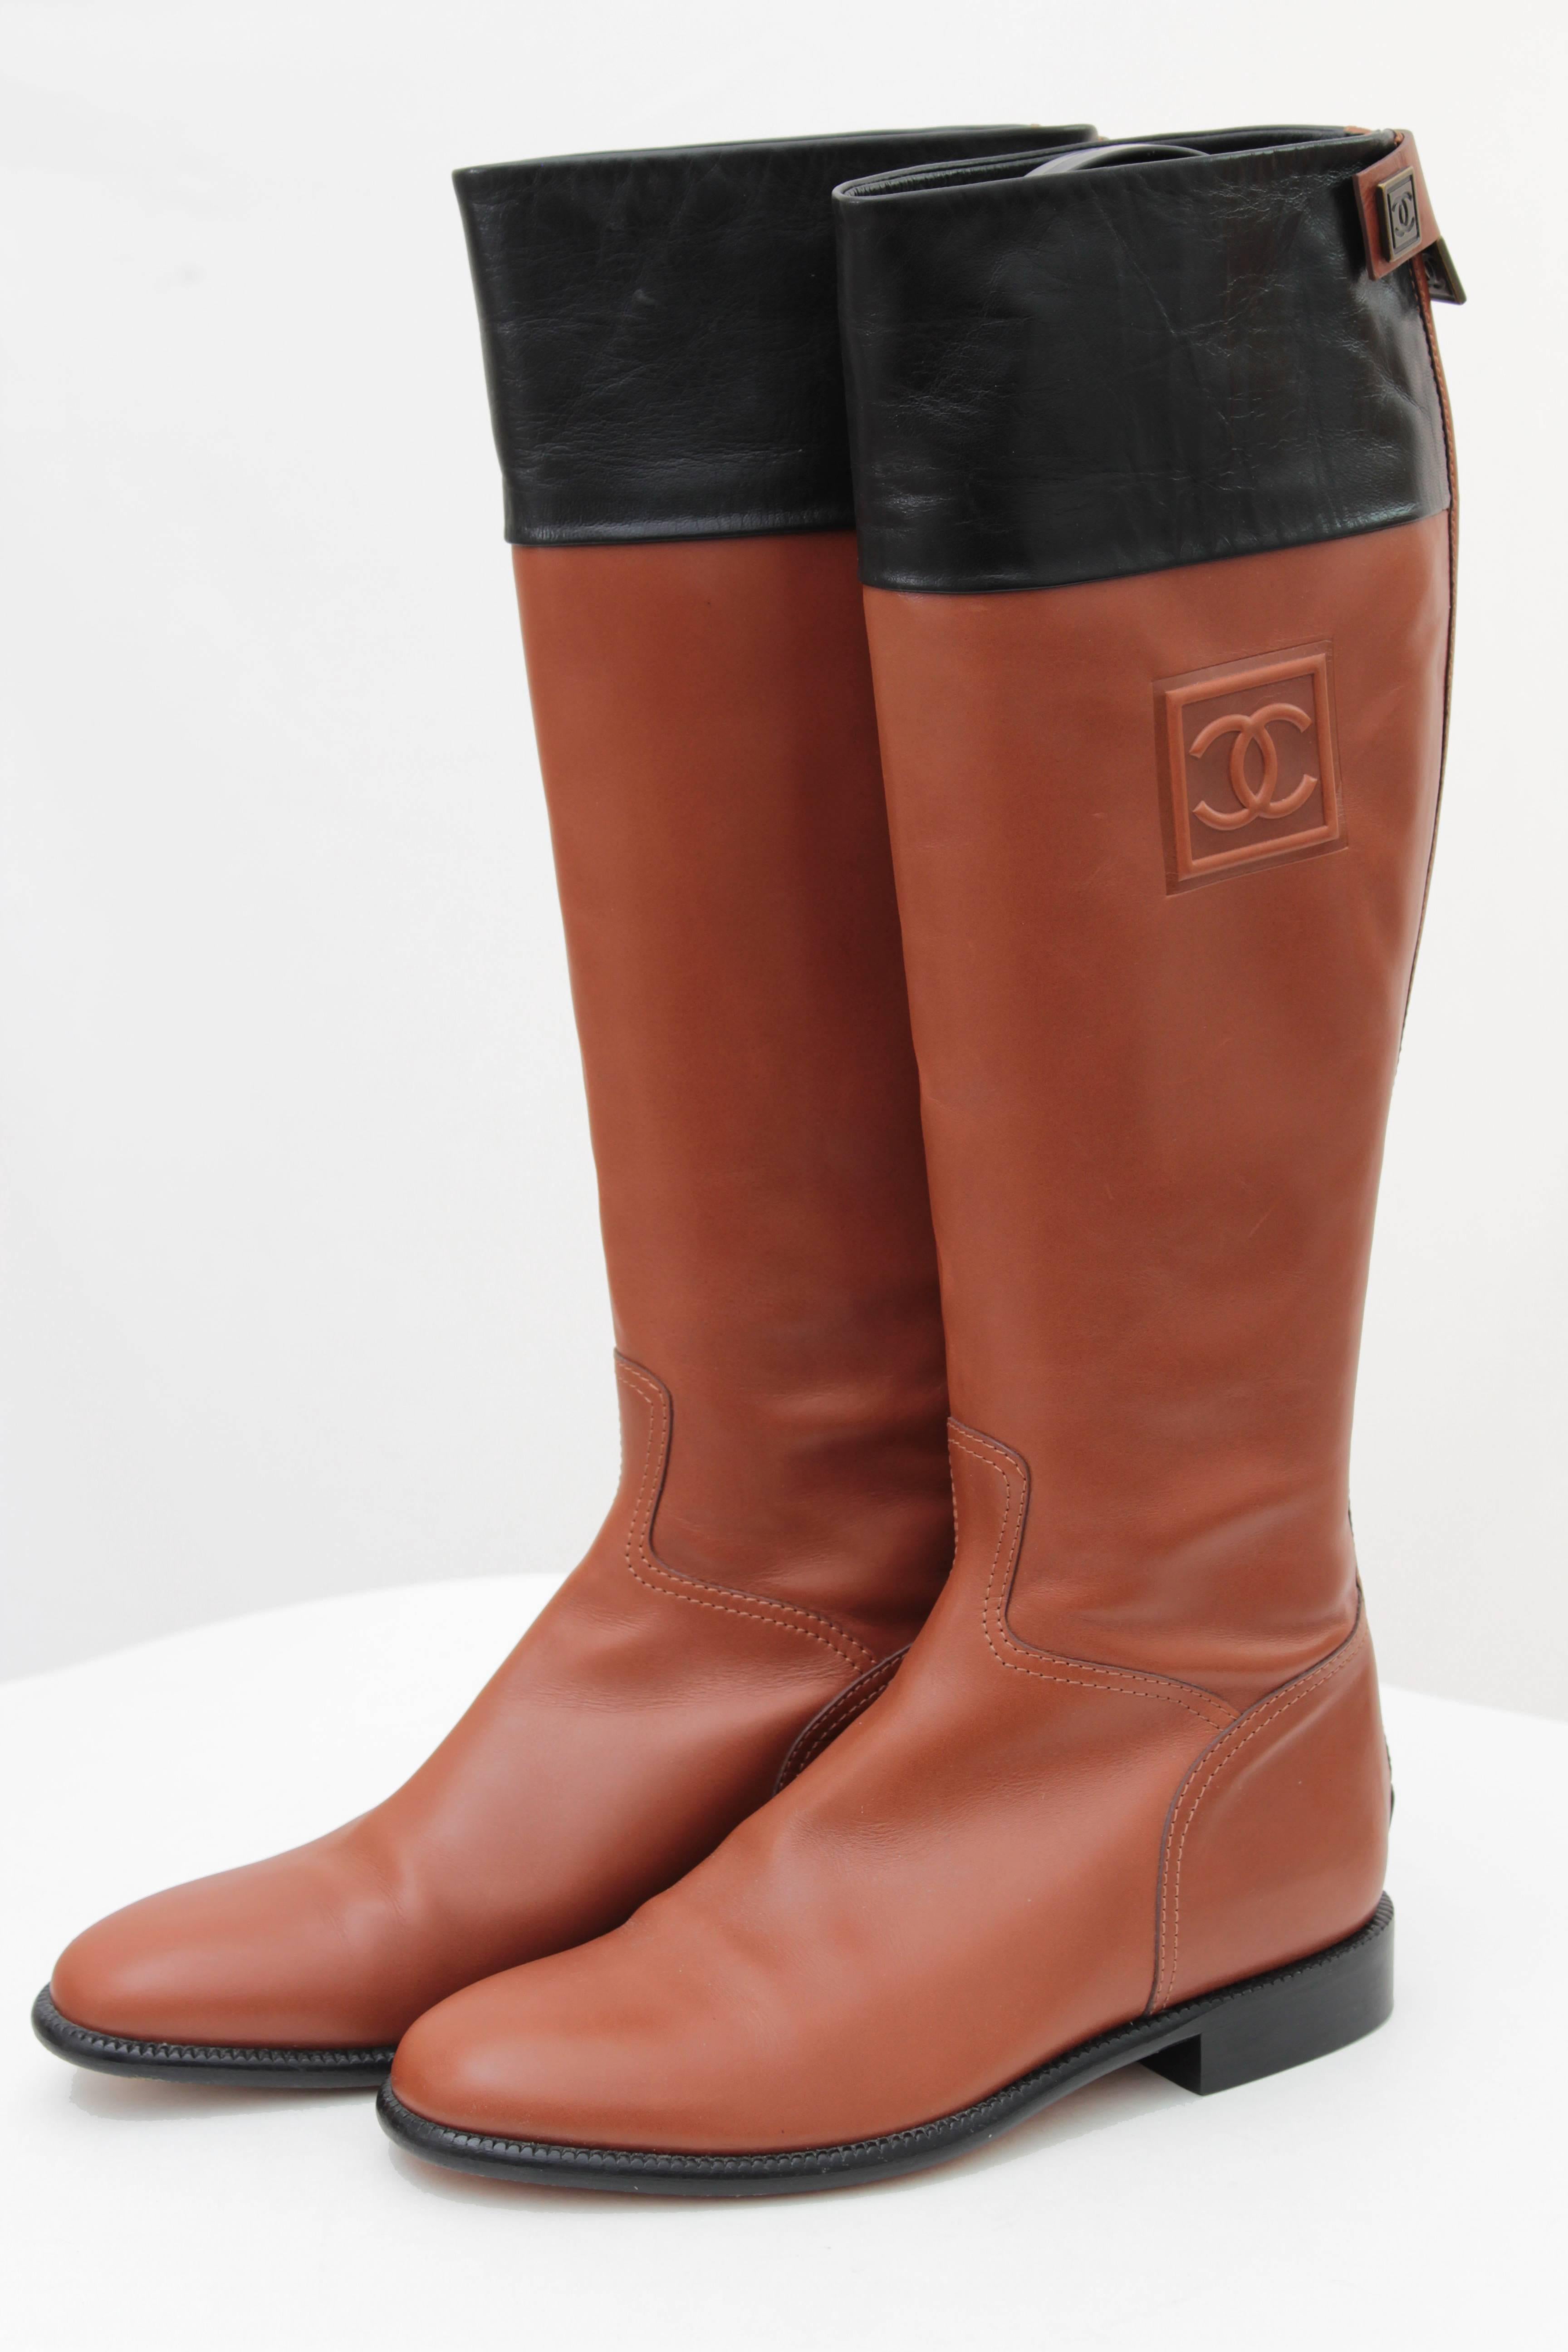 Beige Chanel Tan & Black Leather Riding Boots Knee High CC logo Equestrian sz 39 + Box